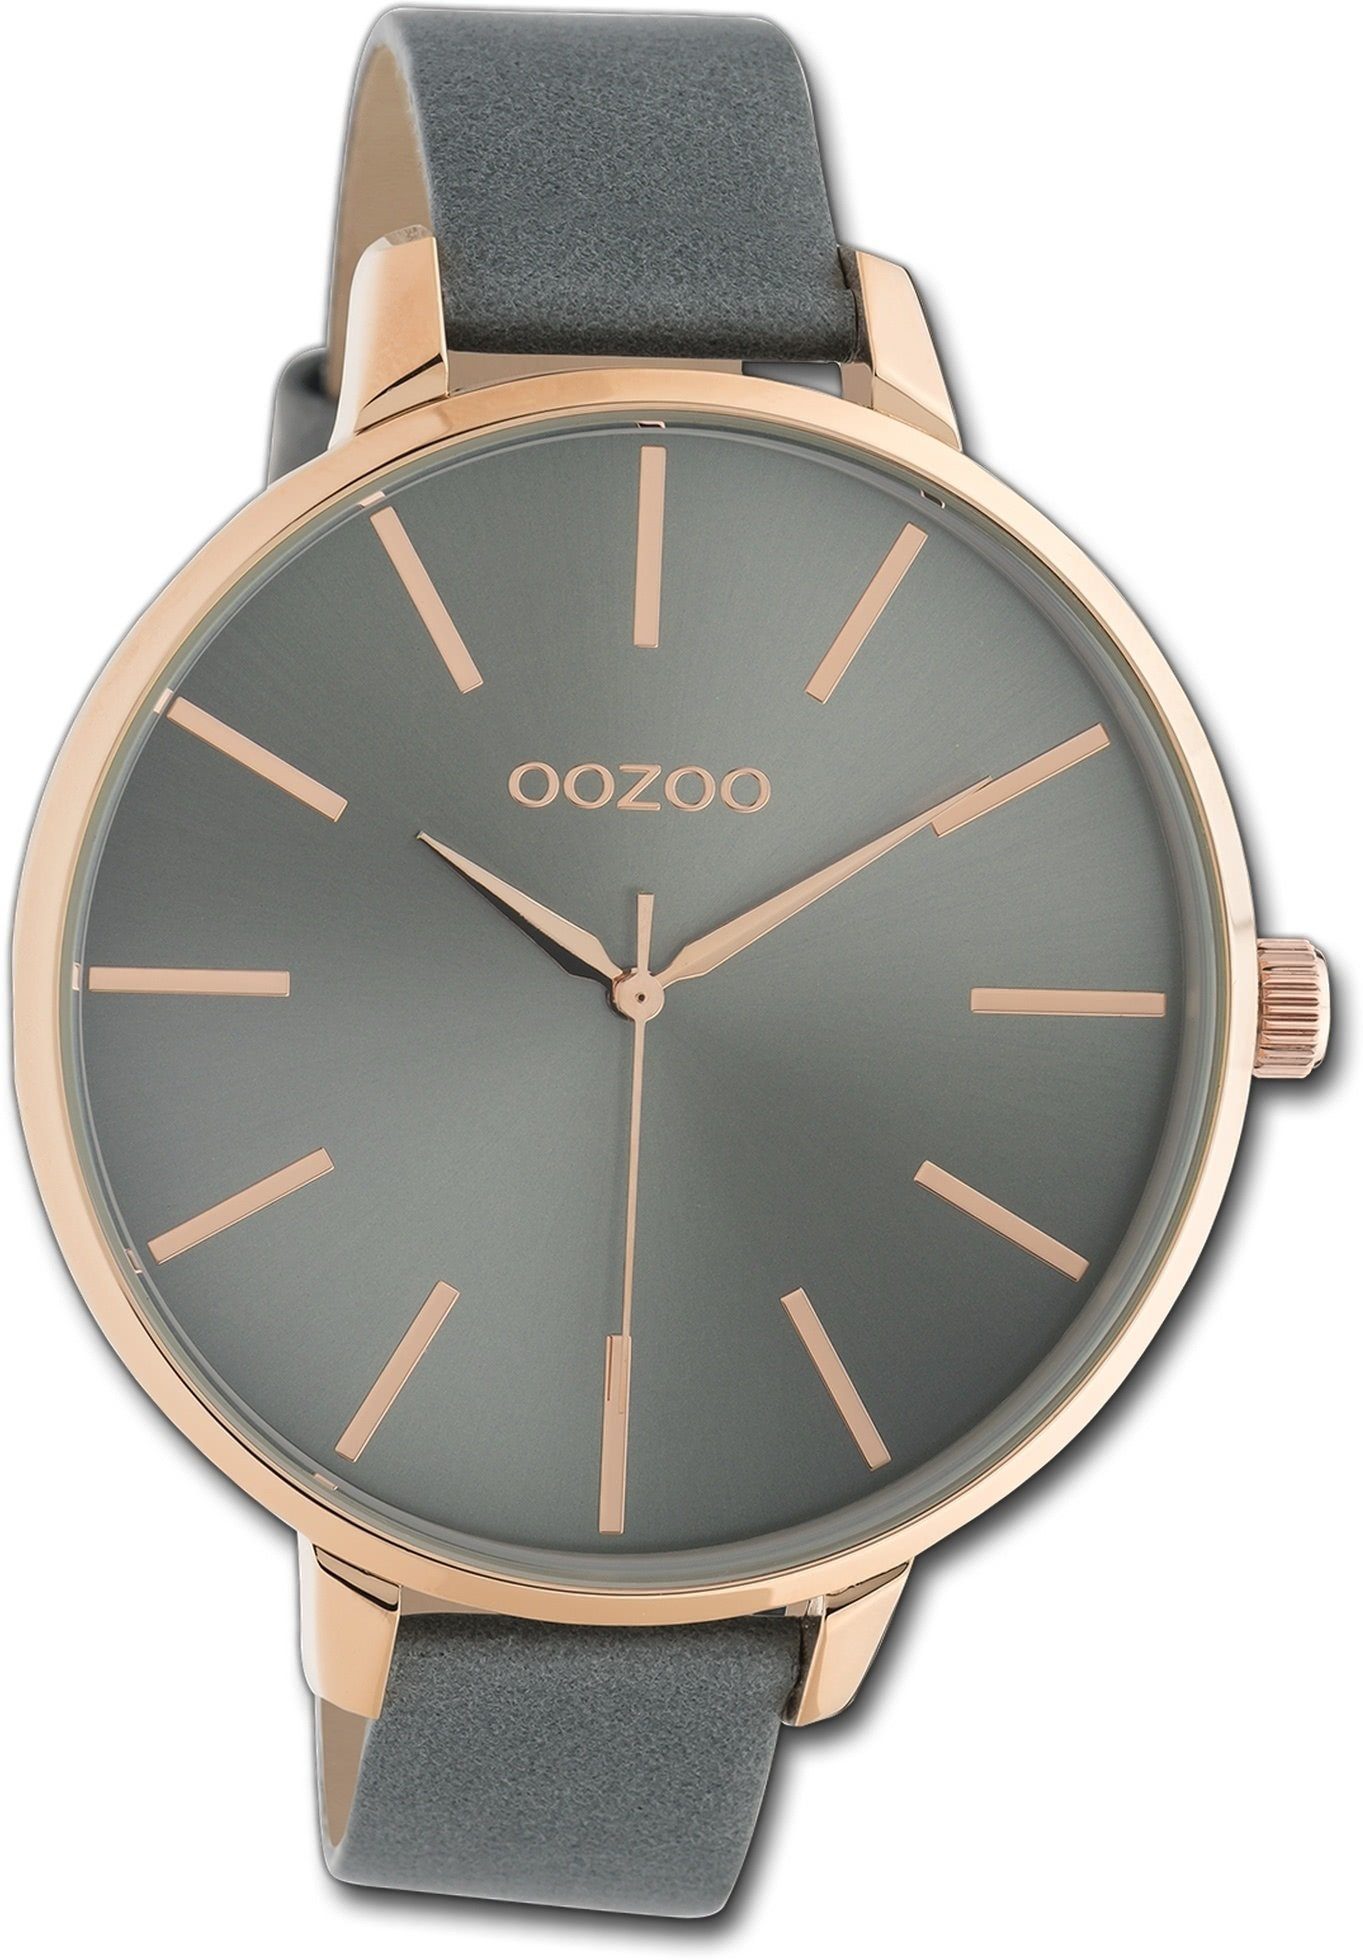 OOZOO Quarzuhr Oozoo Damen Uhr Timepieces C10713, Damenuhr Lederarmband blaugrau, rundes Gehäuse, extra groß (ca. 48mm)